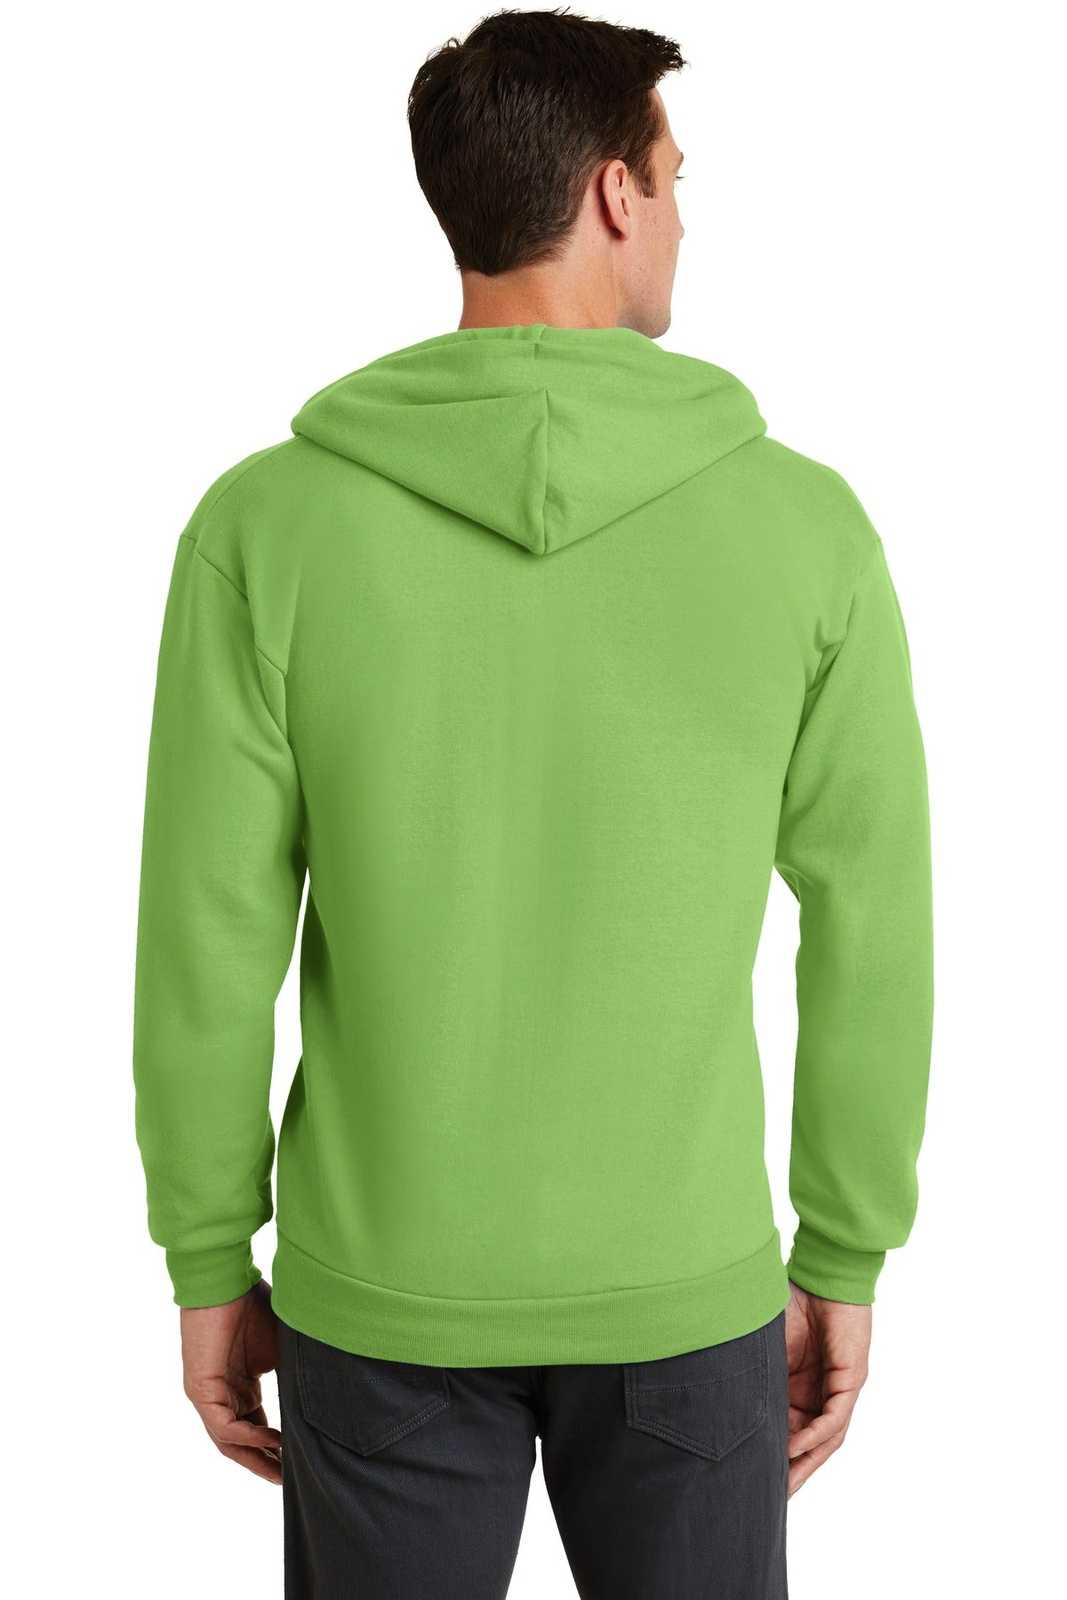 Port & Company PC78ZH Core Fleece Full-Zip Hooded Sweatshirt - Lime - HIT a Double - 1